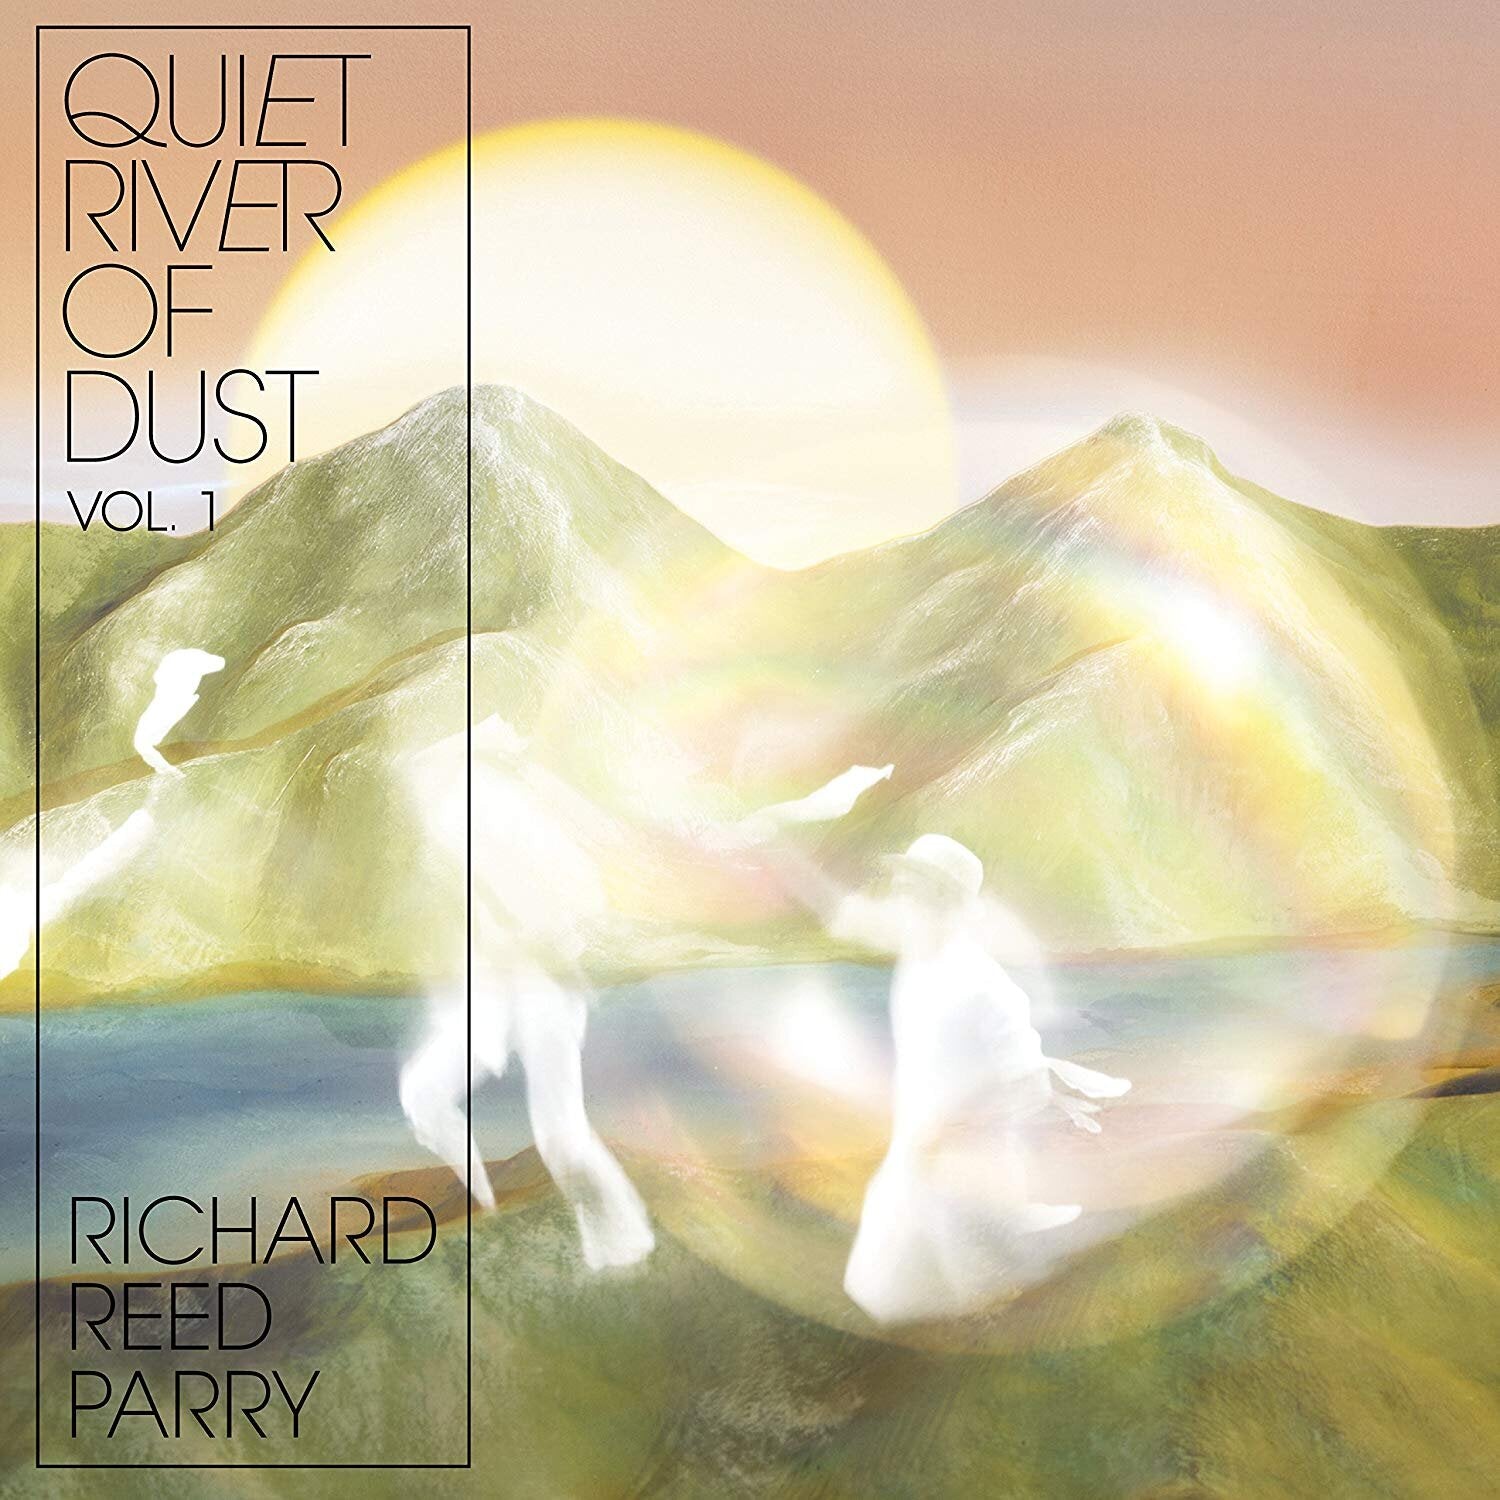 Parry, Richard Reed (Arcade Fire) "Quiet River of Dust Vol 1" [White Vinyl]